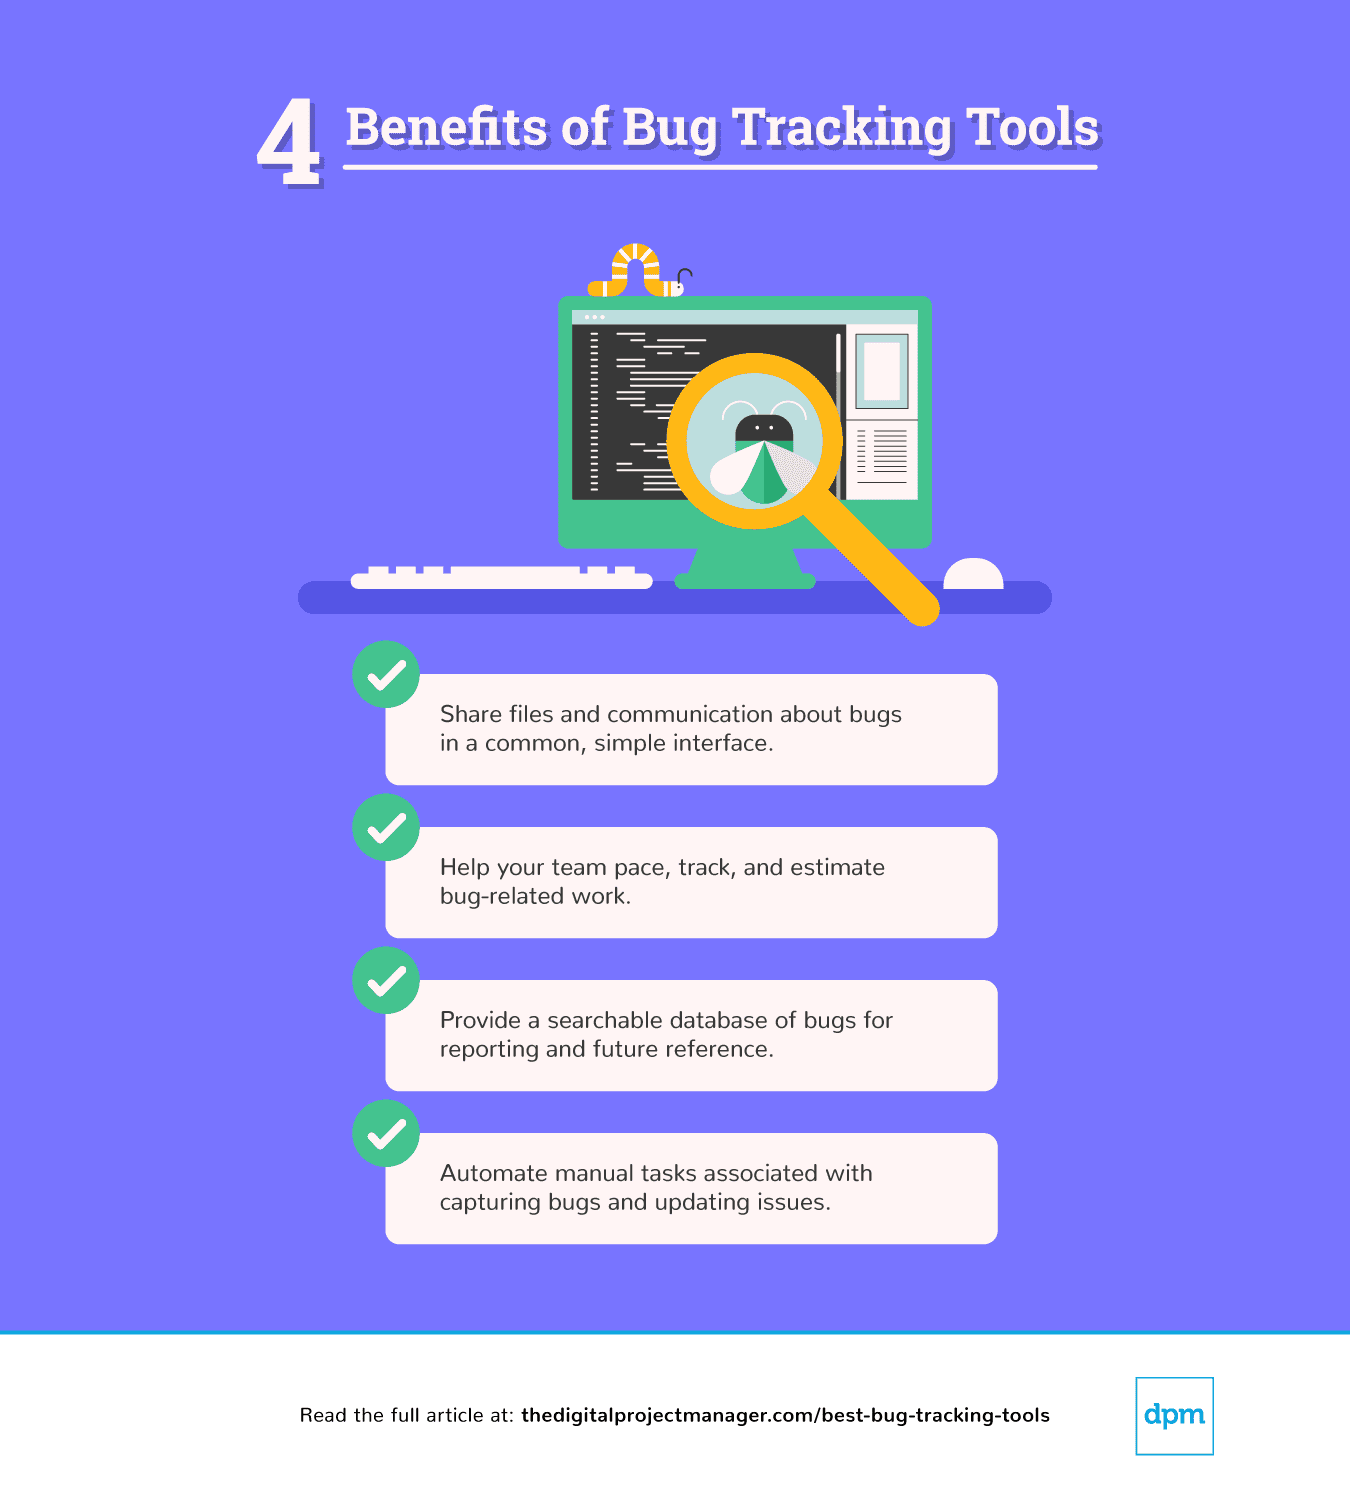 Benefits of bug tracking tools